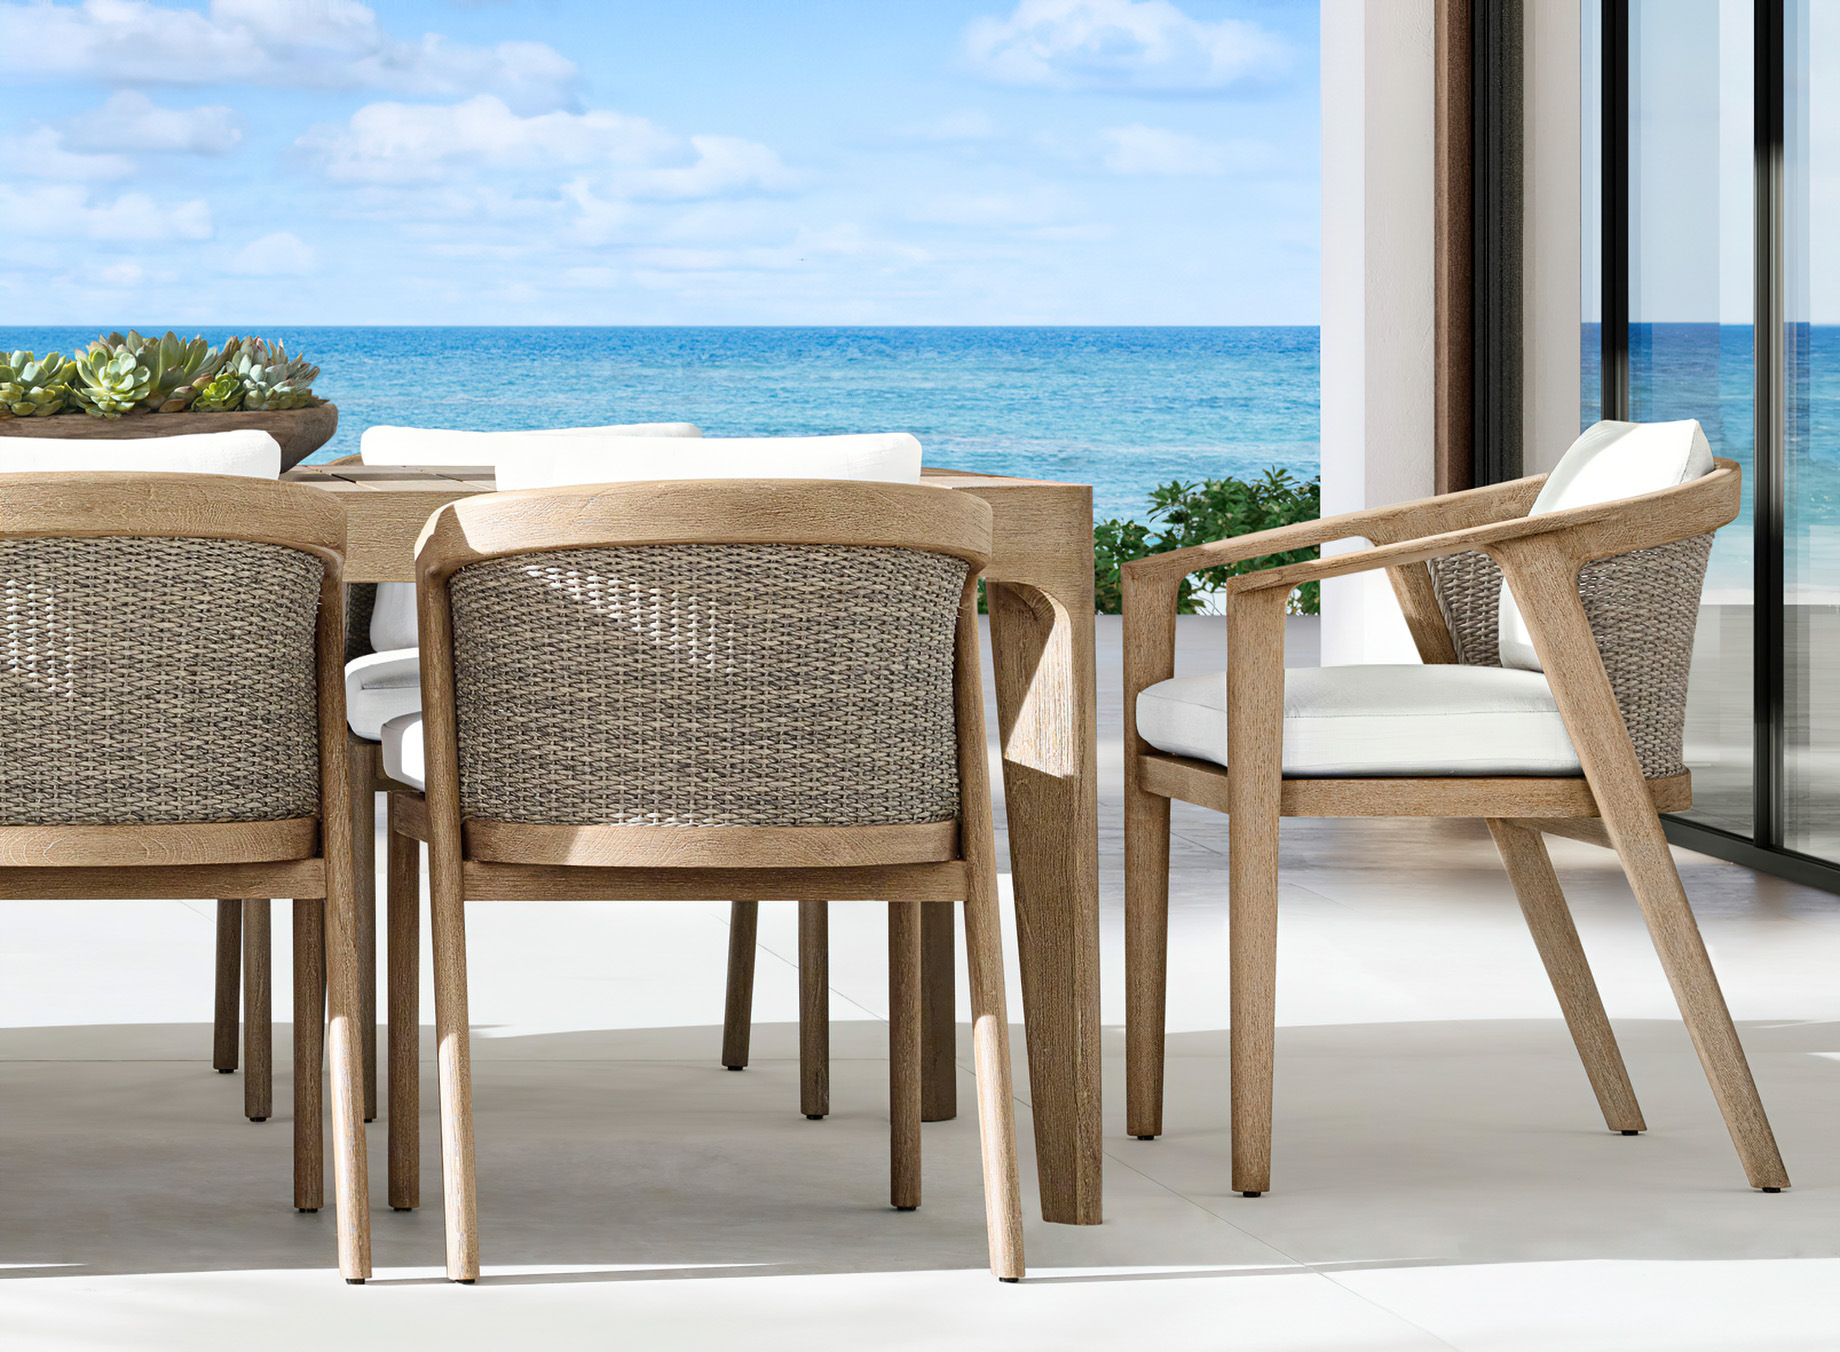 Malta Teak Collection Outdoor Furniture Design for RH - Ramon Esteve - Design Symmetry